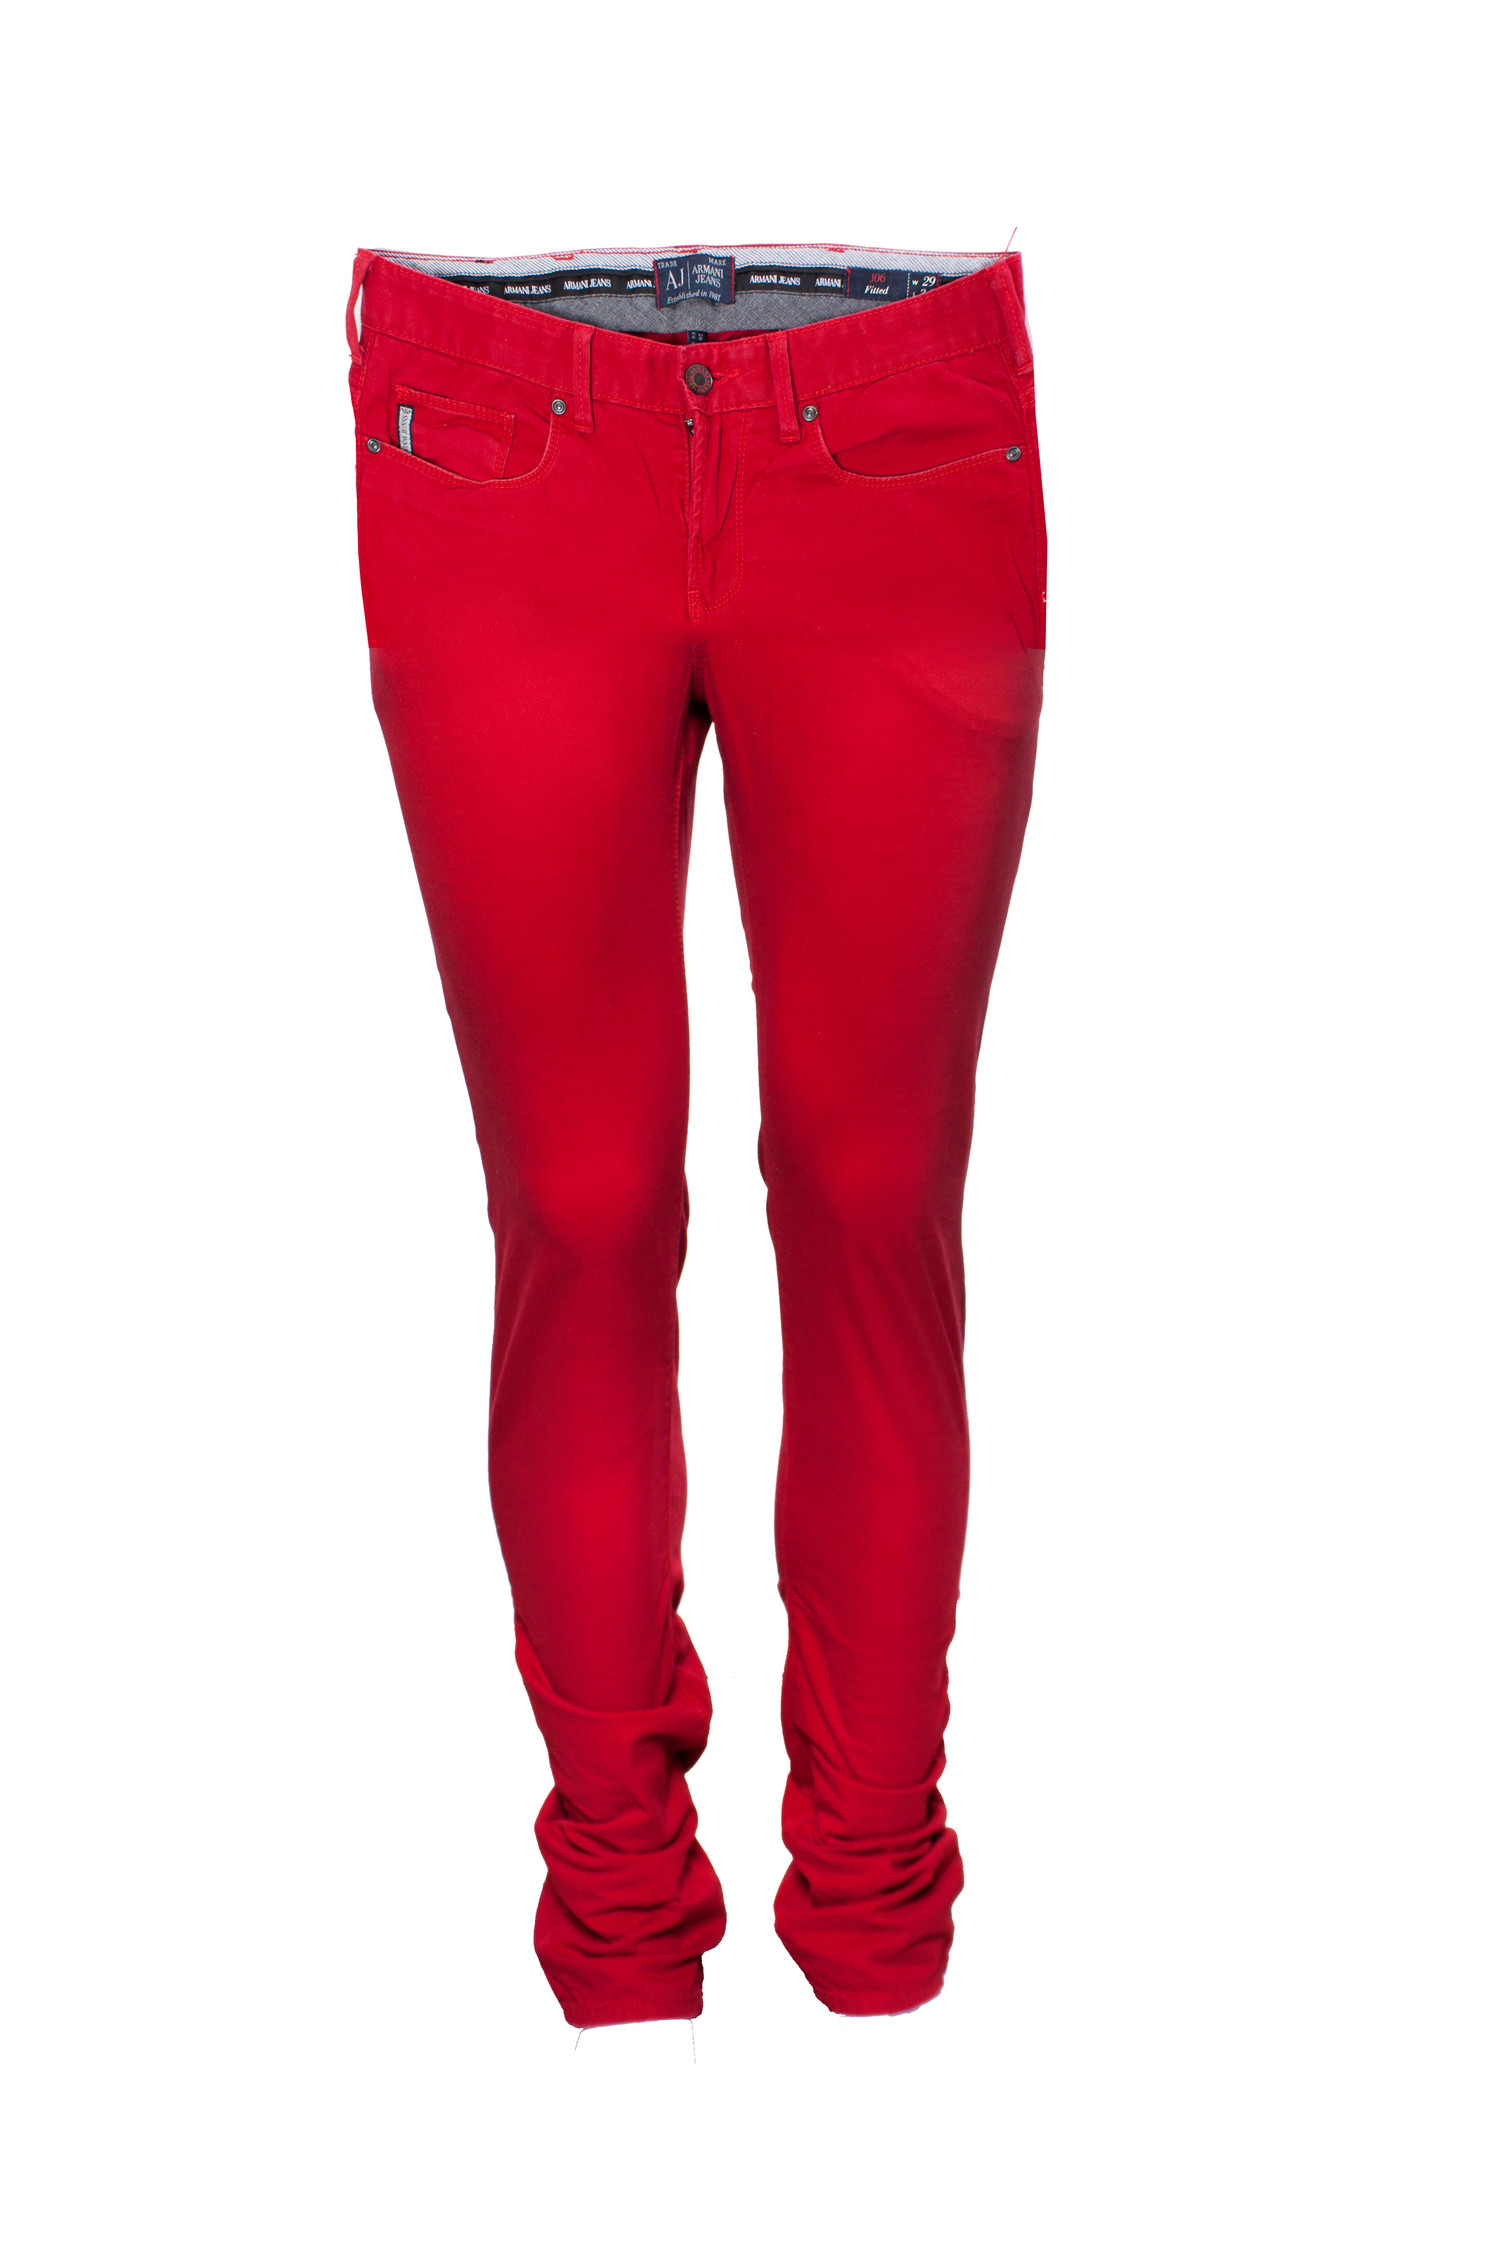 Armani Jeans, Red jeans in size W29/S. - Unique Designer Pieces